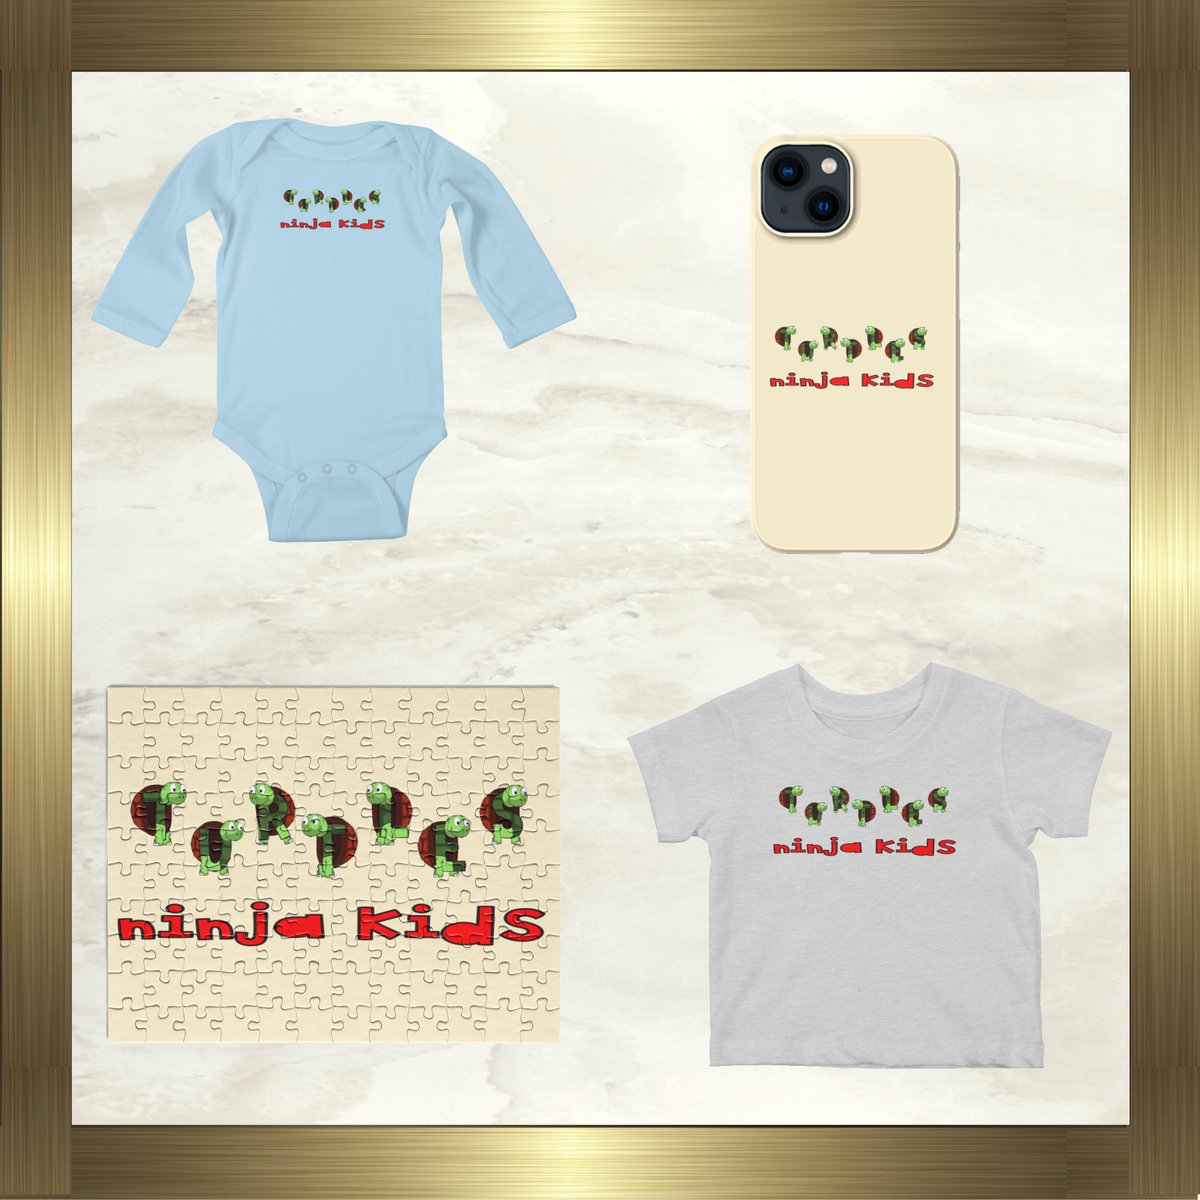 cjdevidfox.threadless.com/designs/ninja-… #KidsFashion #schoolkids #KidsStore
#Kidswear #Kidfriendly #Kidsgifts #Kidsofinstagram #Kidsstyle #girlclothes #boysclothes #teespring #threadless #redbubble #zazzle #tshirtdesign